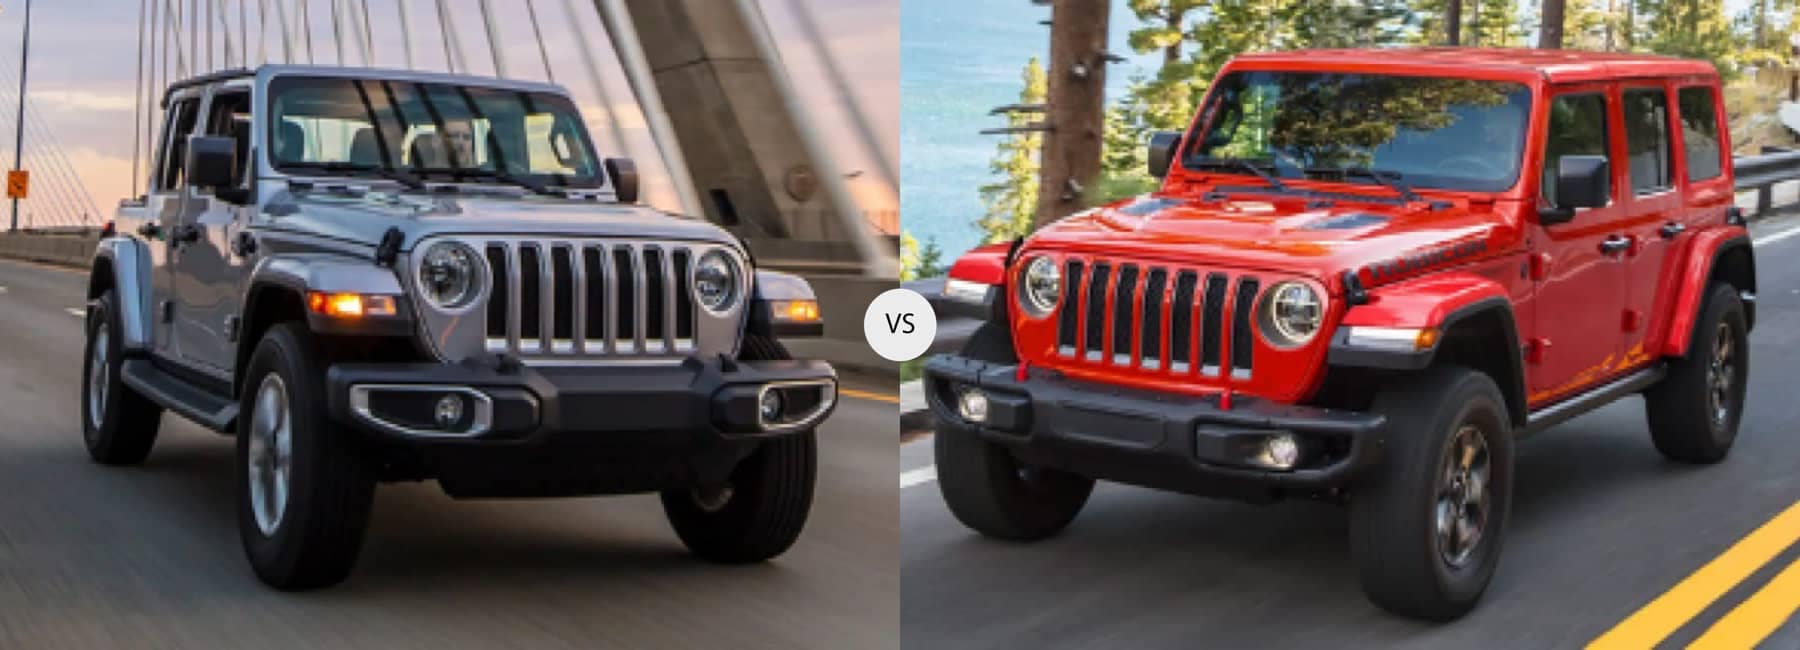 Jeep Wrangler Unlimited vs. Rubicon | Milledgeville Chrysler Dodge Jeep Ram  in Milledgeville